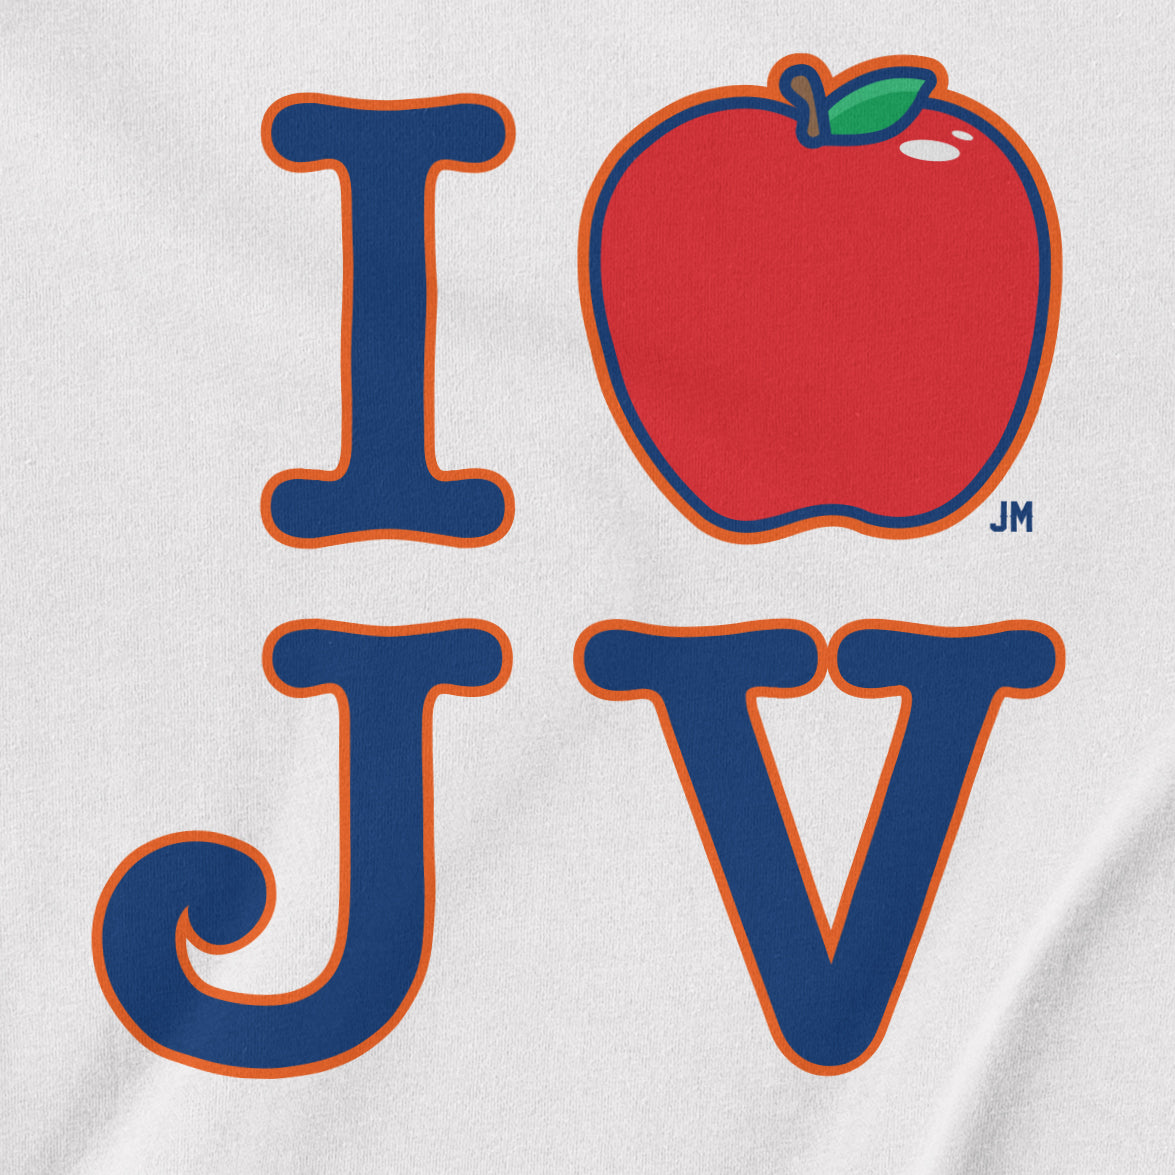 i <3 JV | T-Shirt